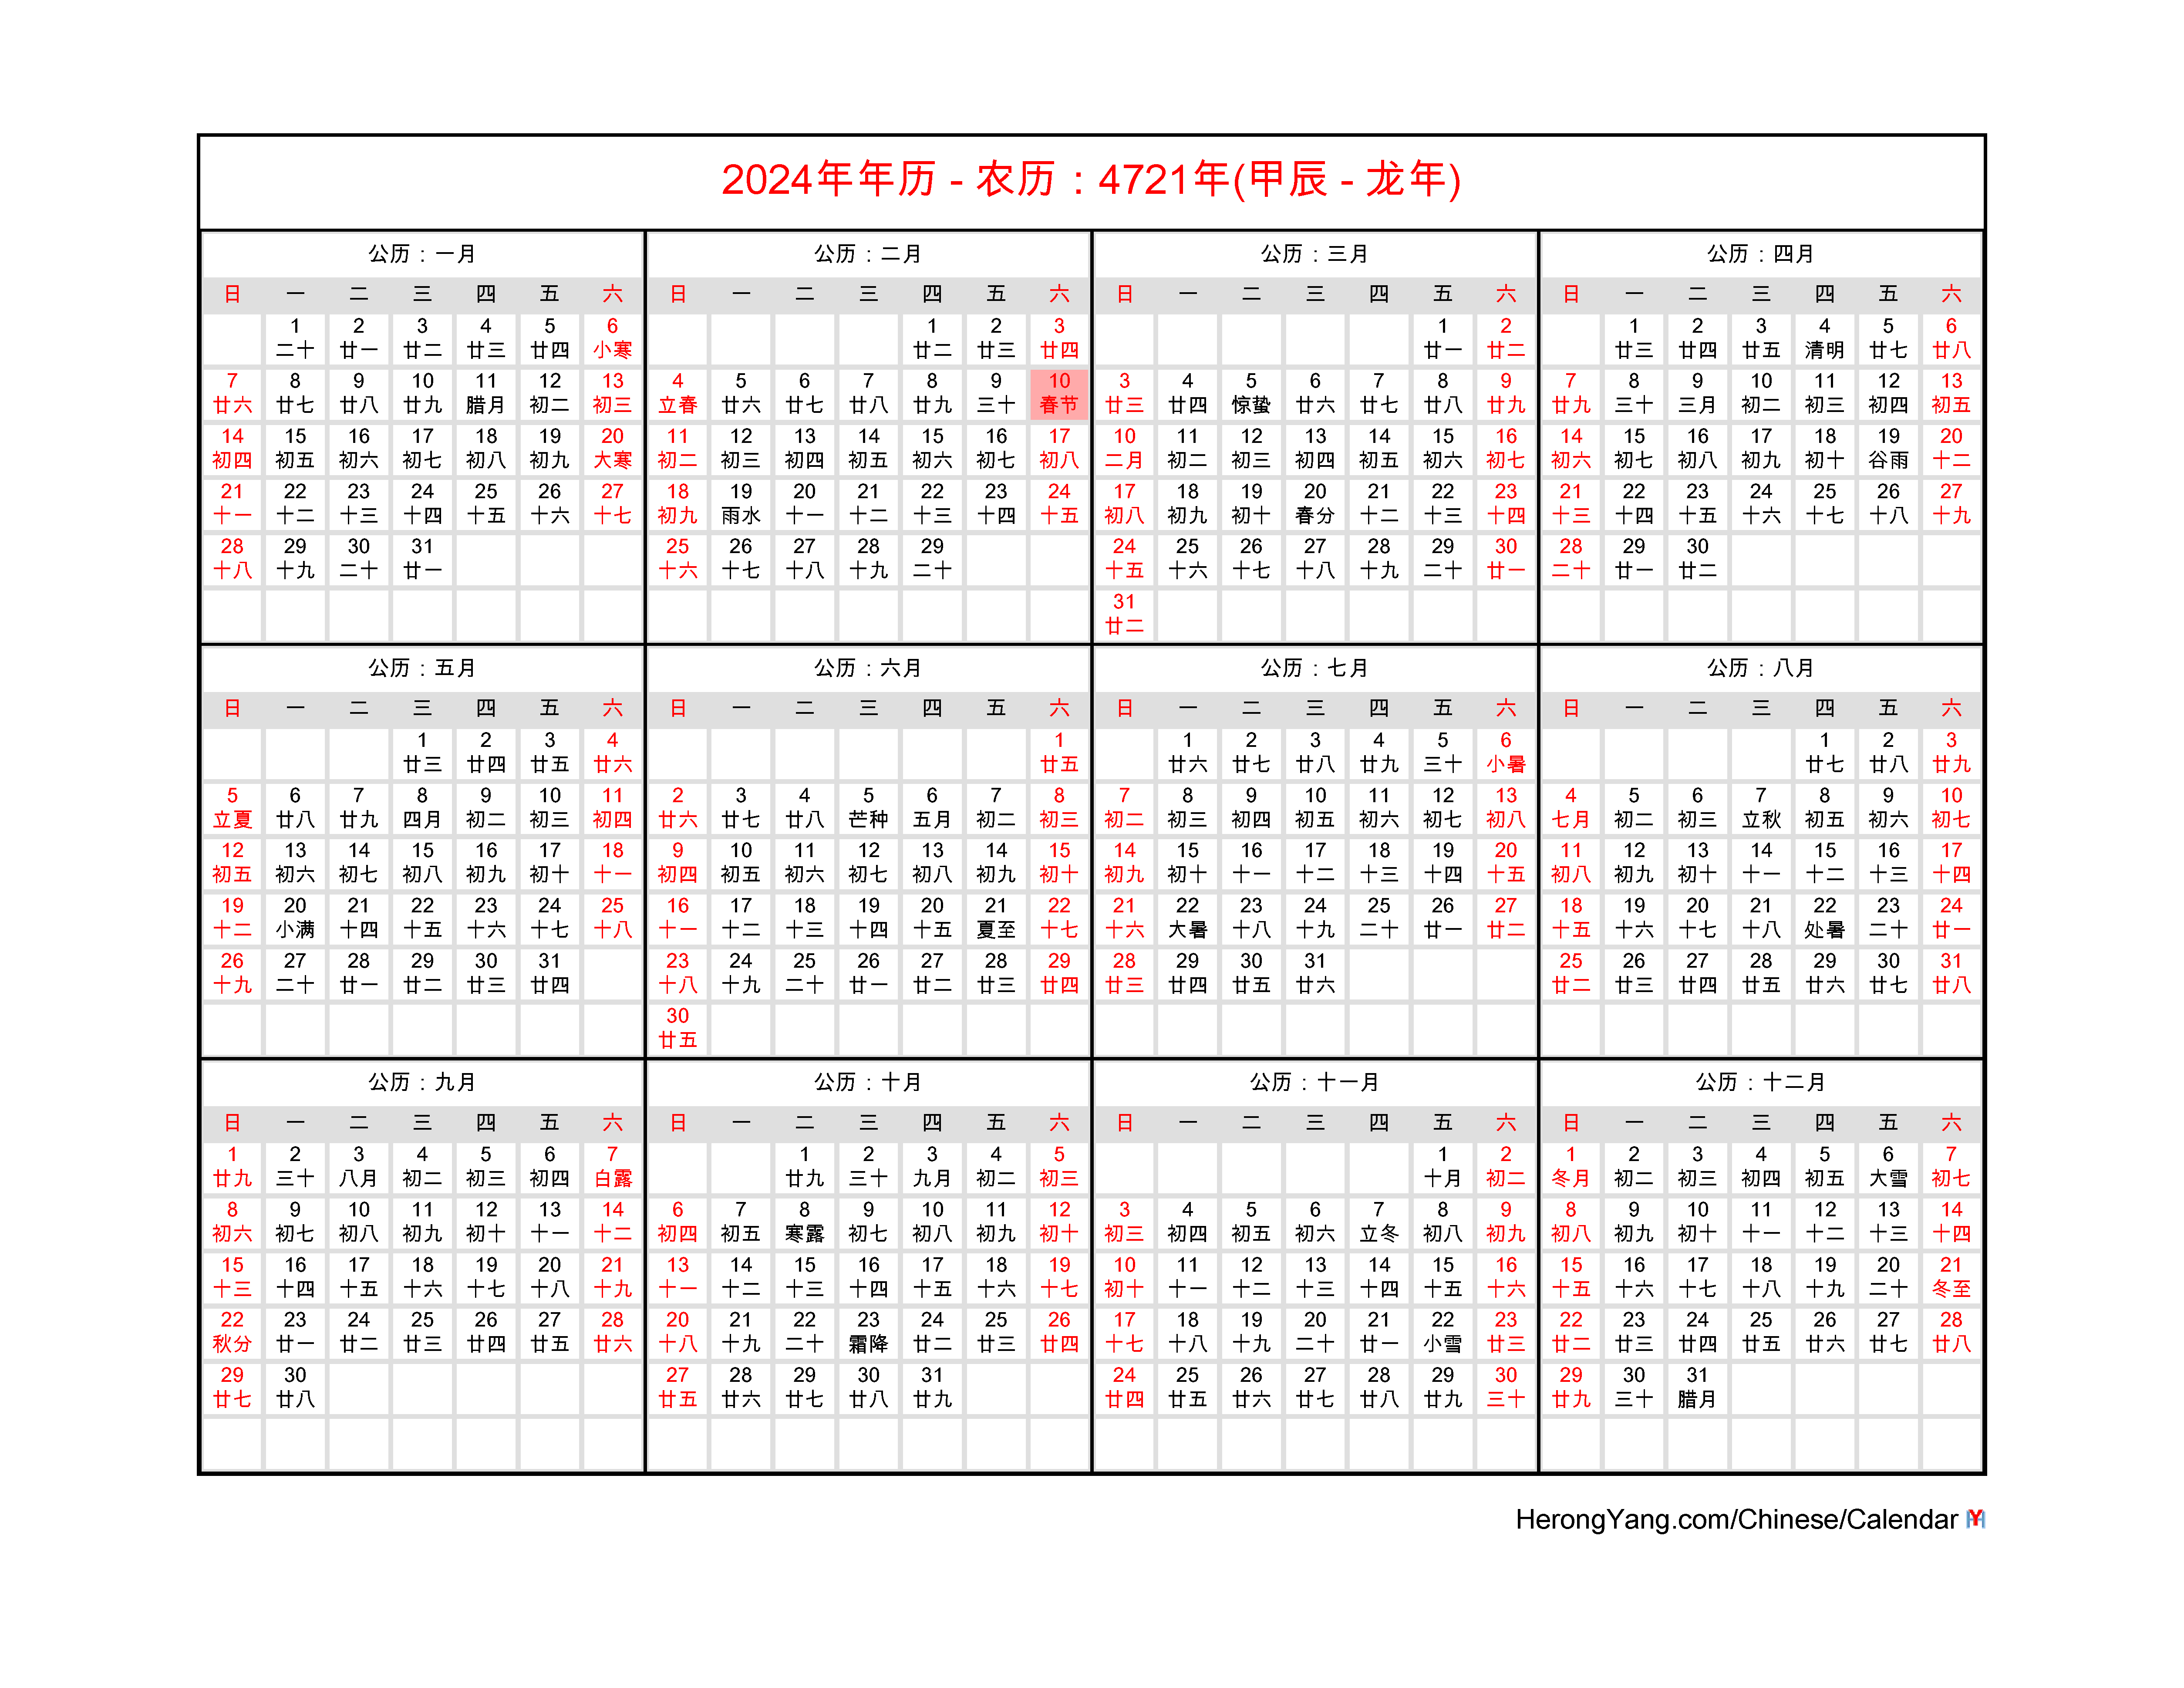 2024 Lunar Calendar Cool Awasome List of - January 2024 Calendar Design